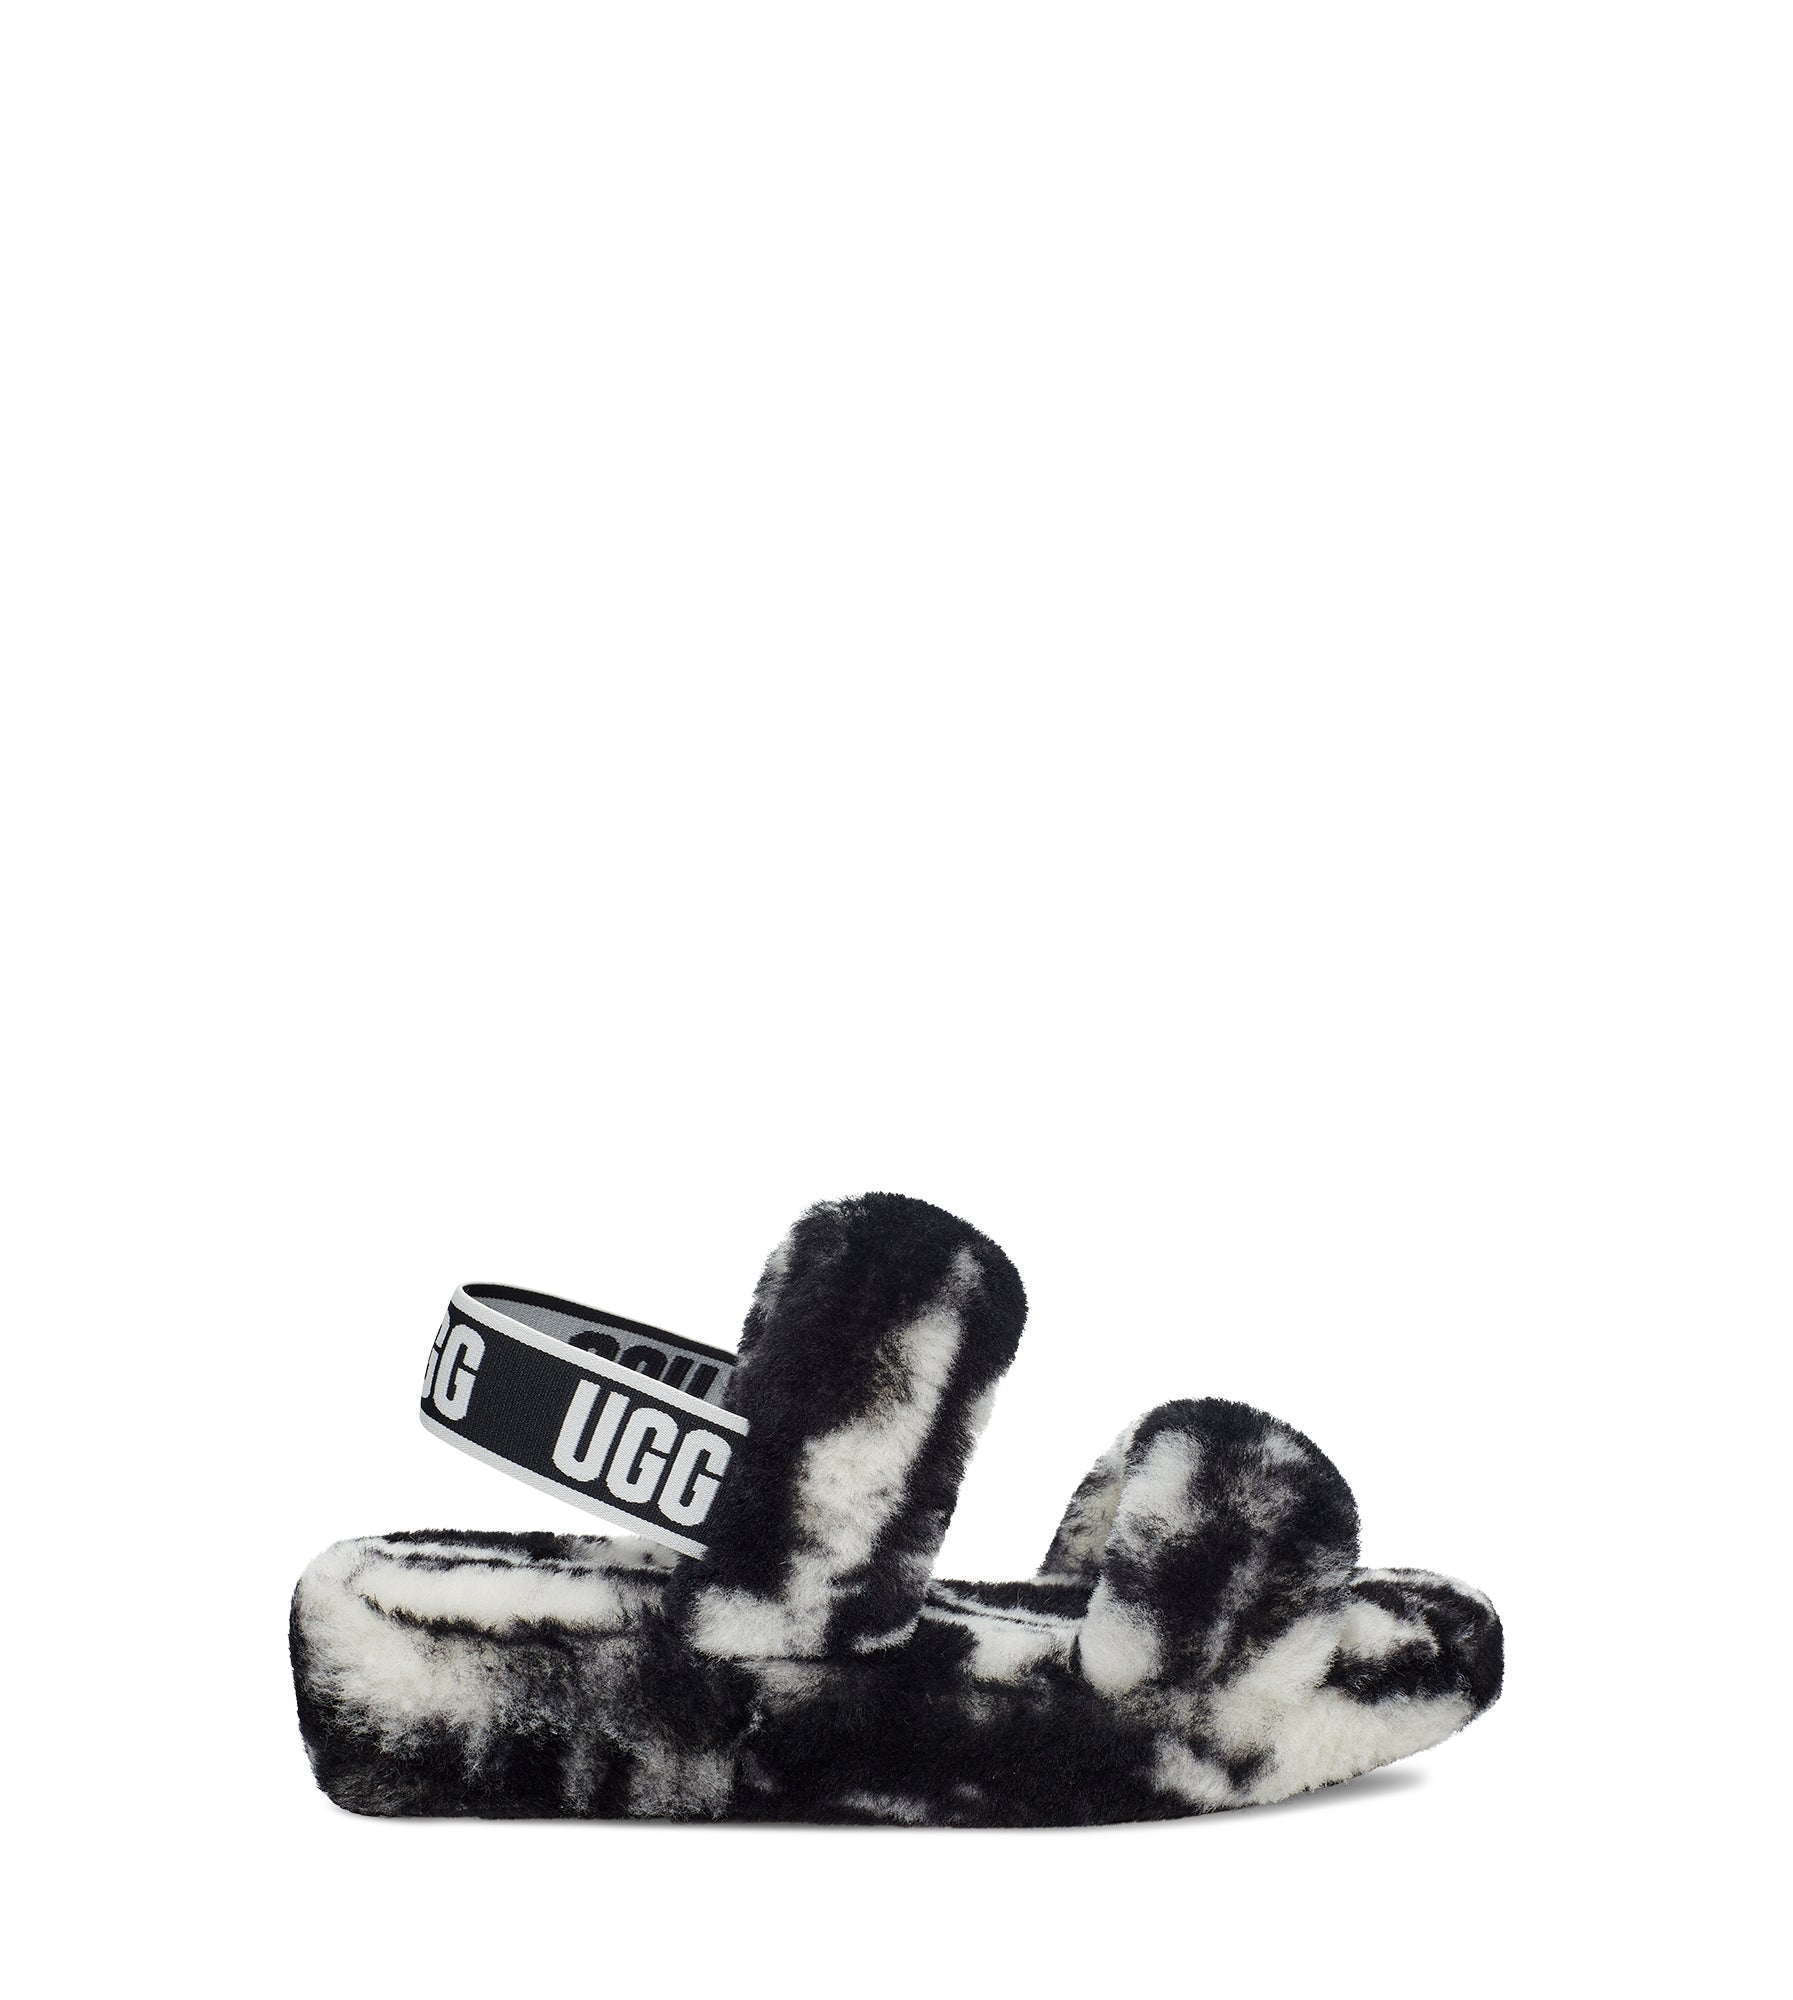 UGG Women’s Slides - Oh Yeah Marble - Black